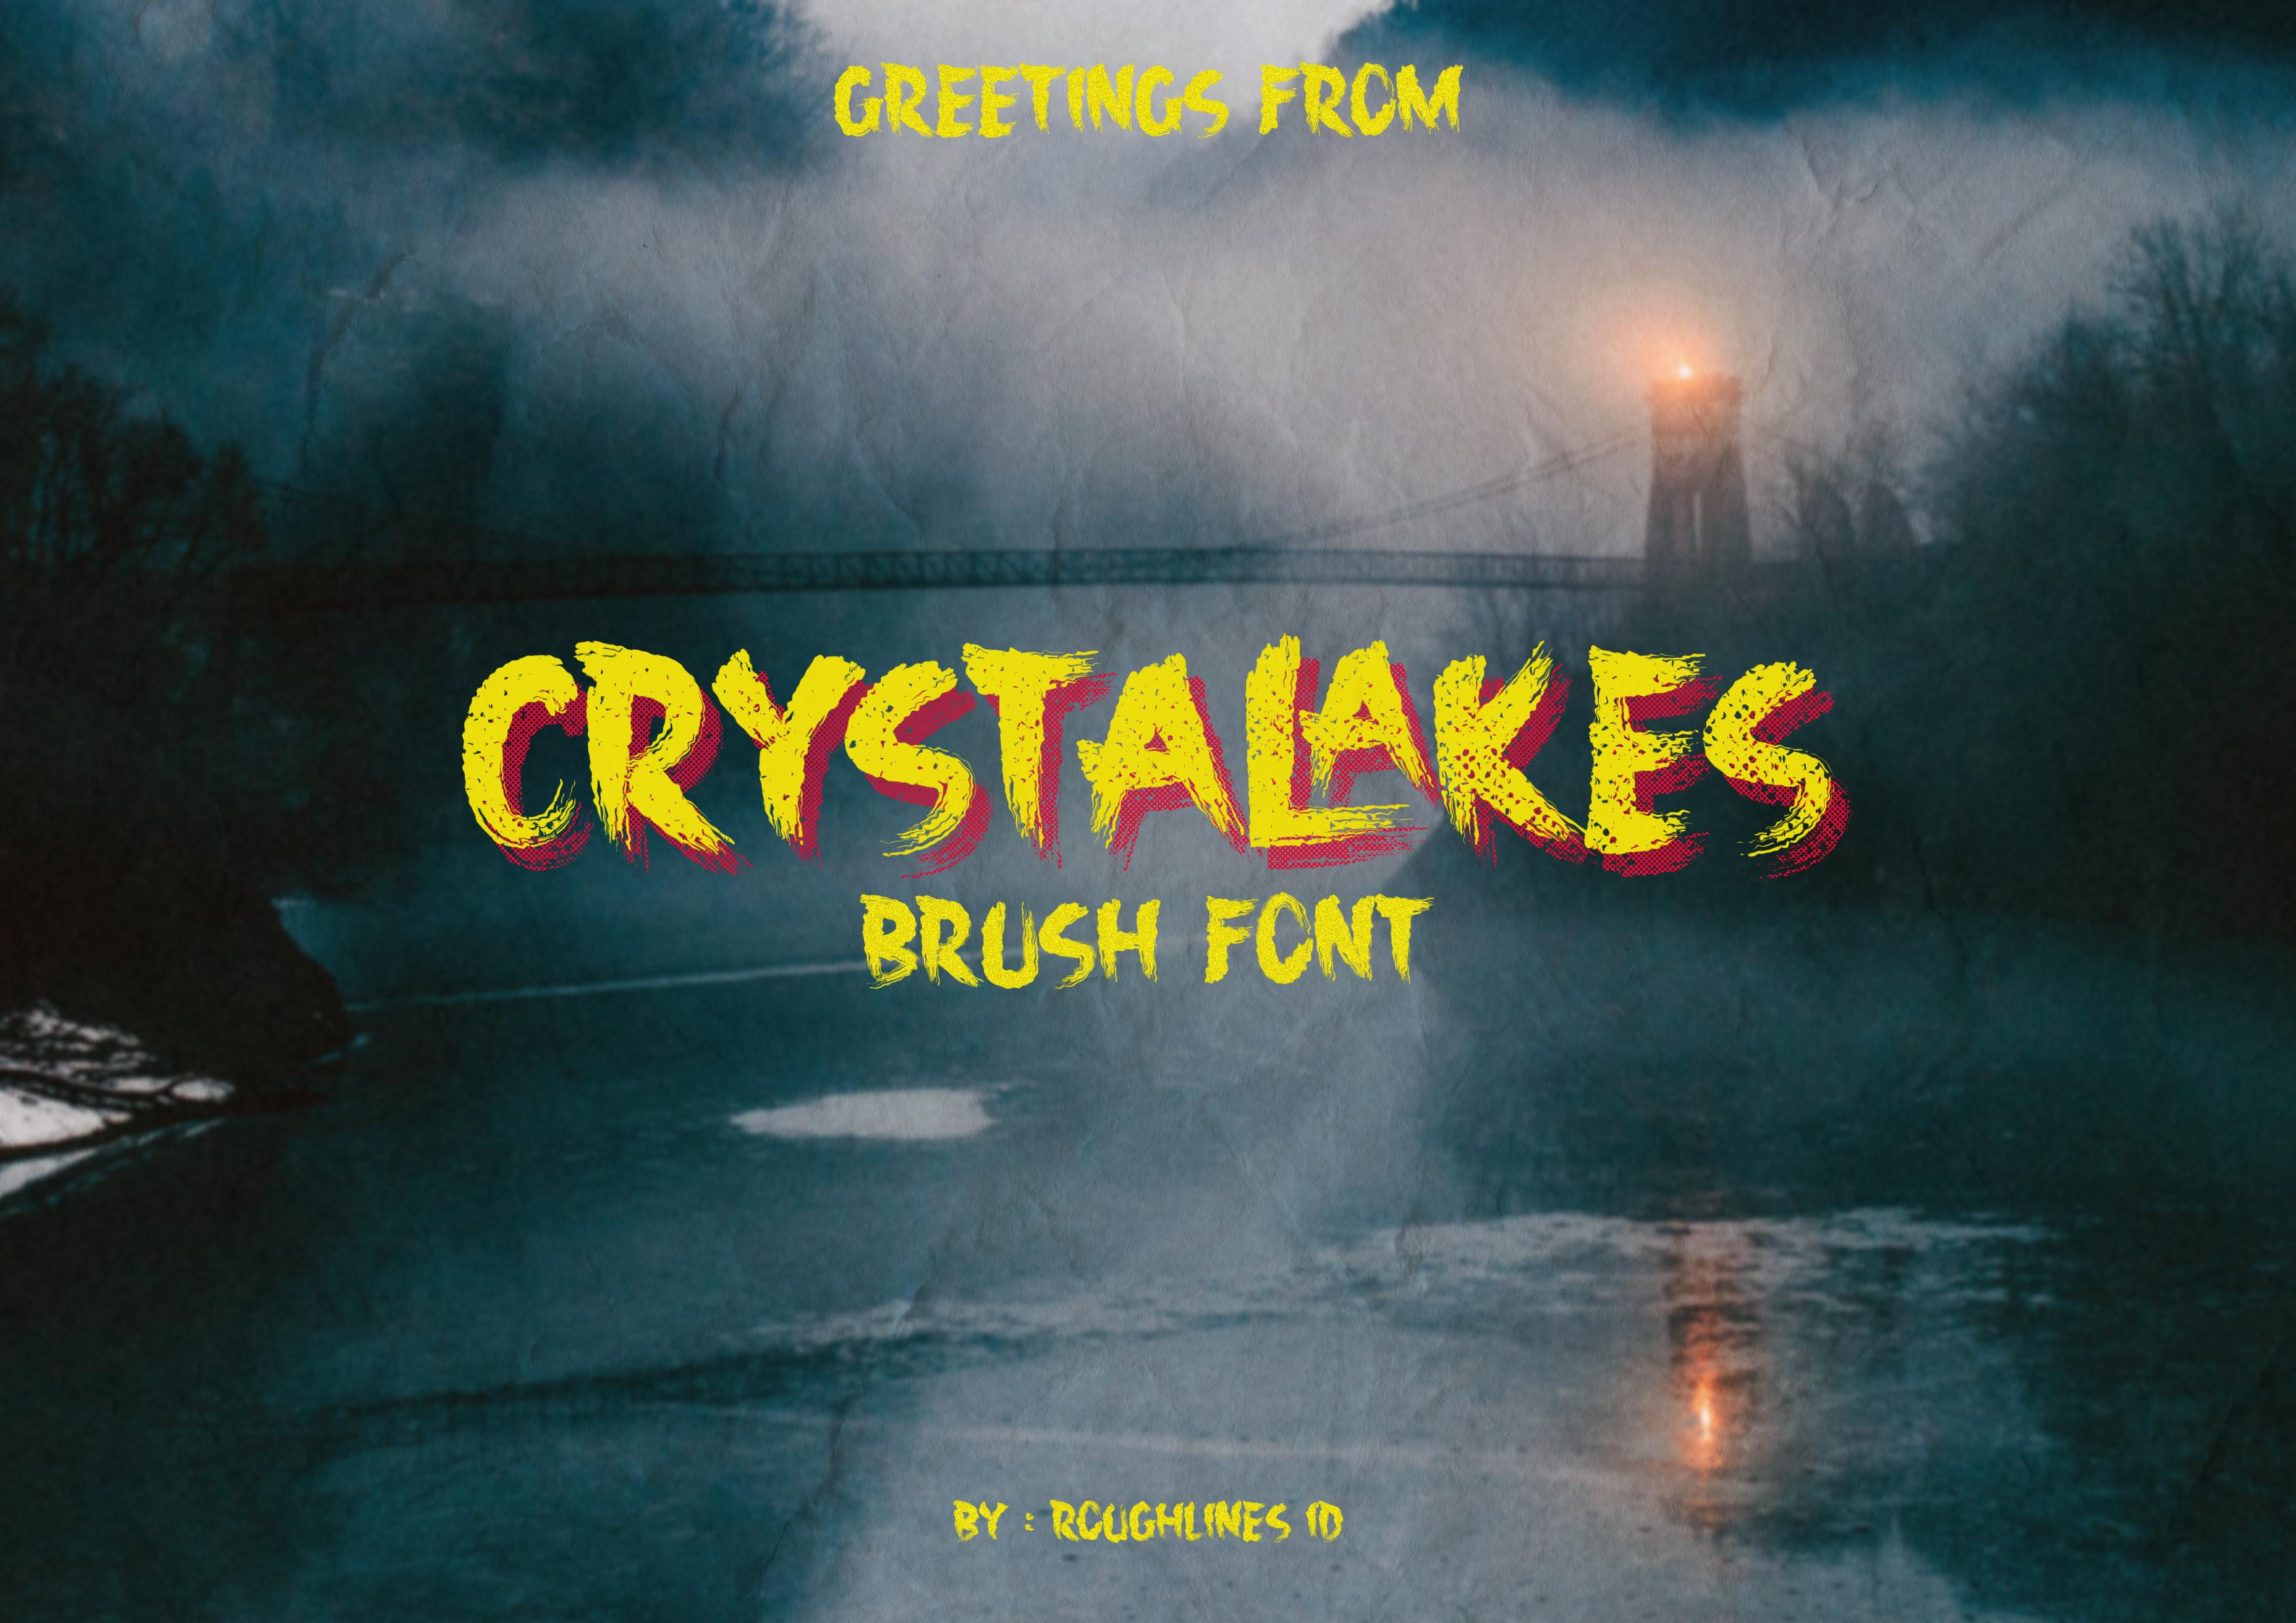 Crystalakes Brush Font